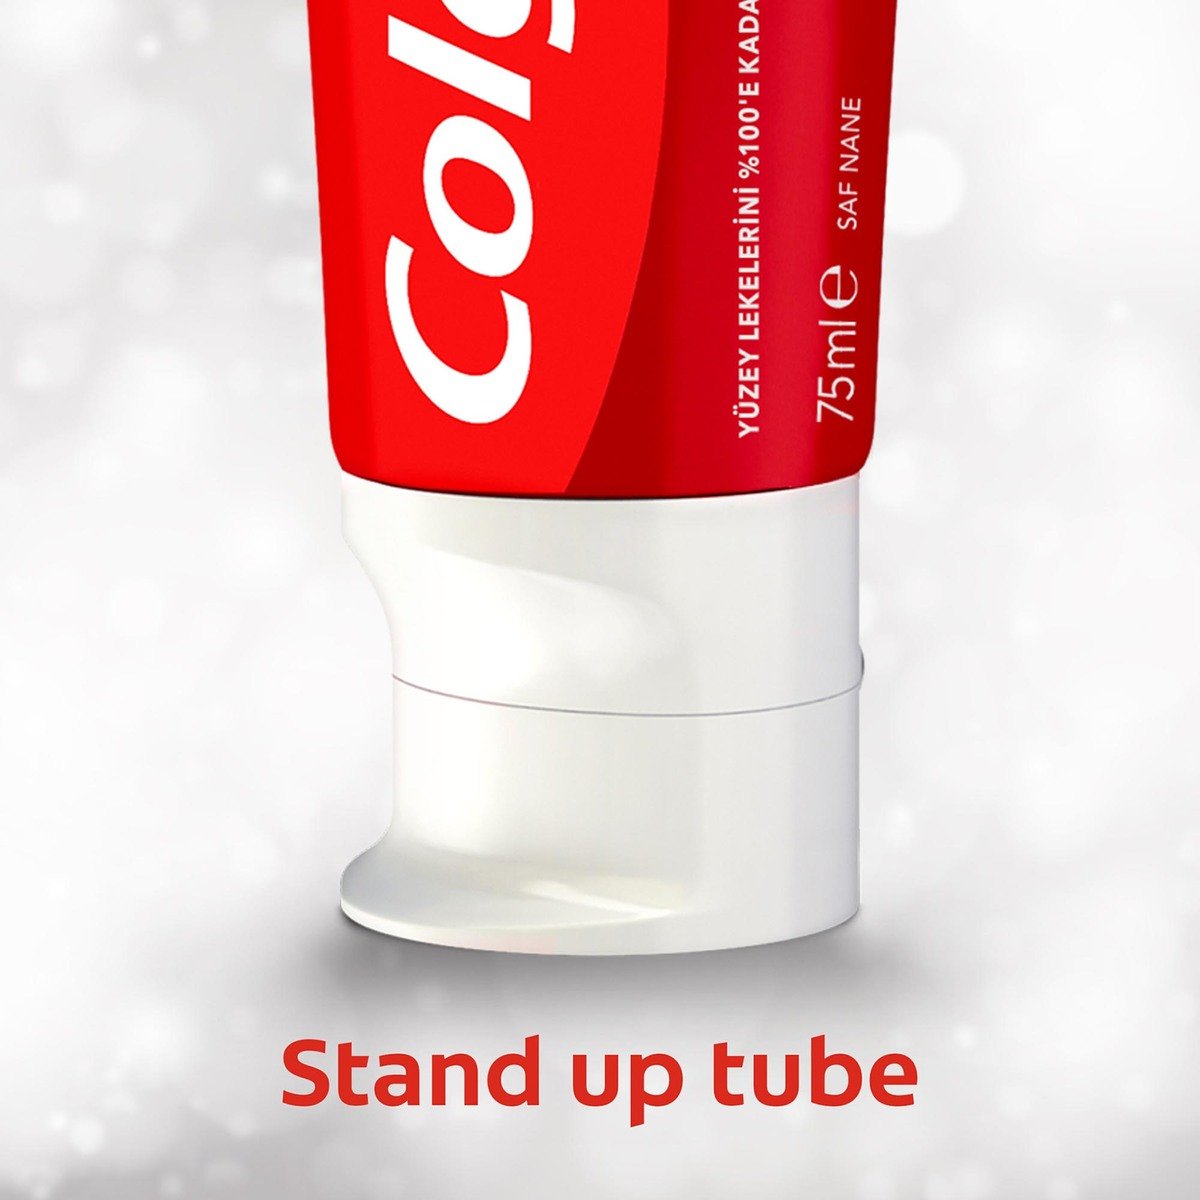 Colgate Toothpaste Optic White Expert 75 ml